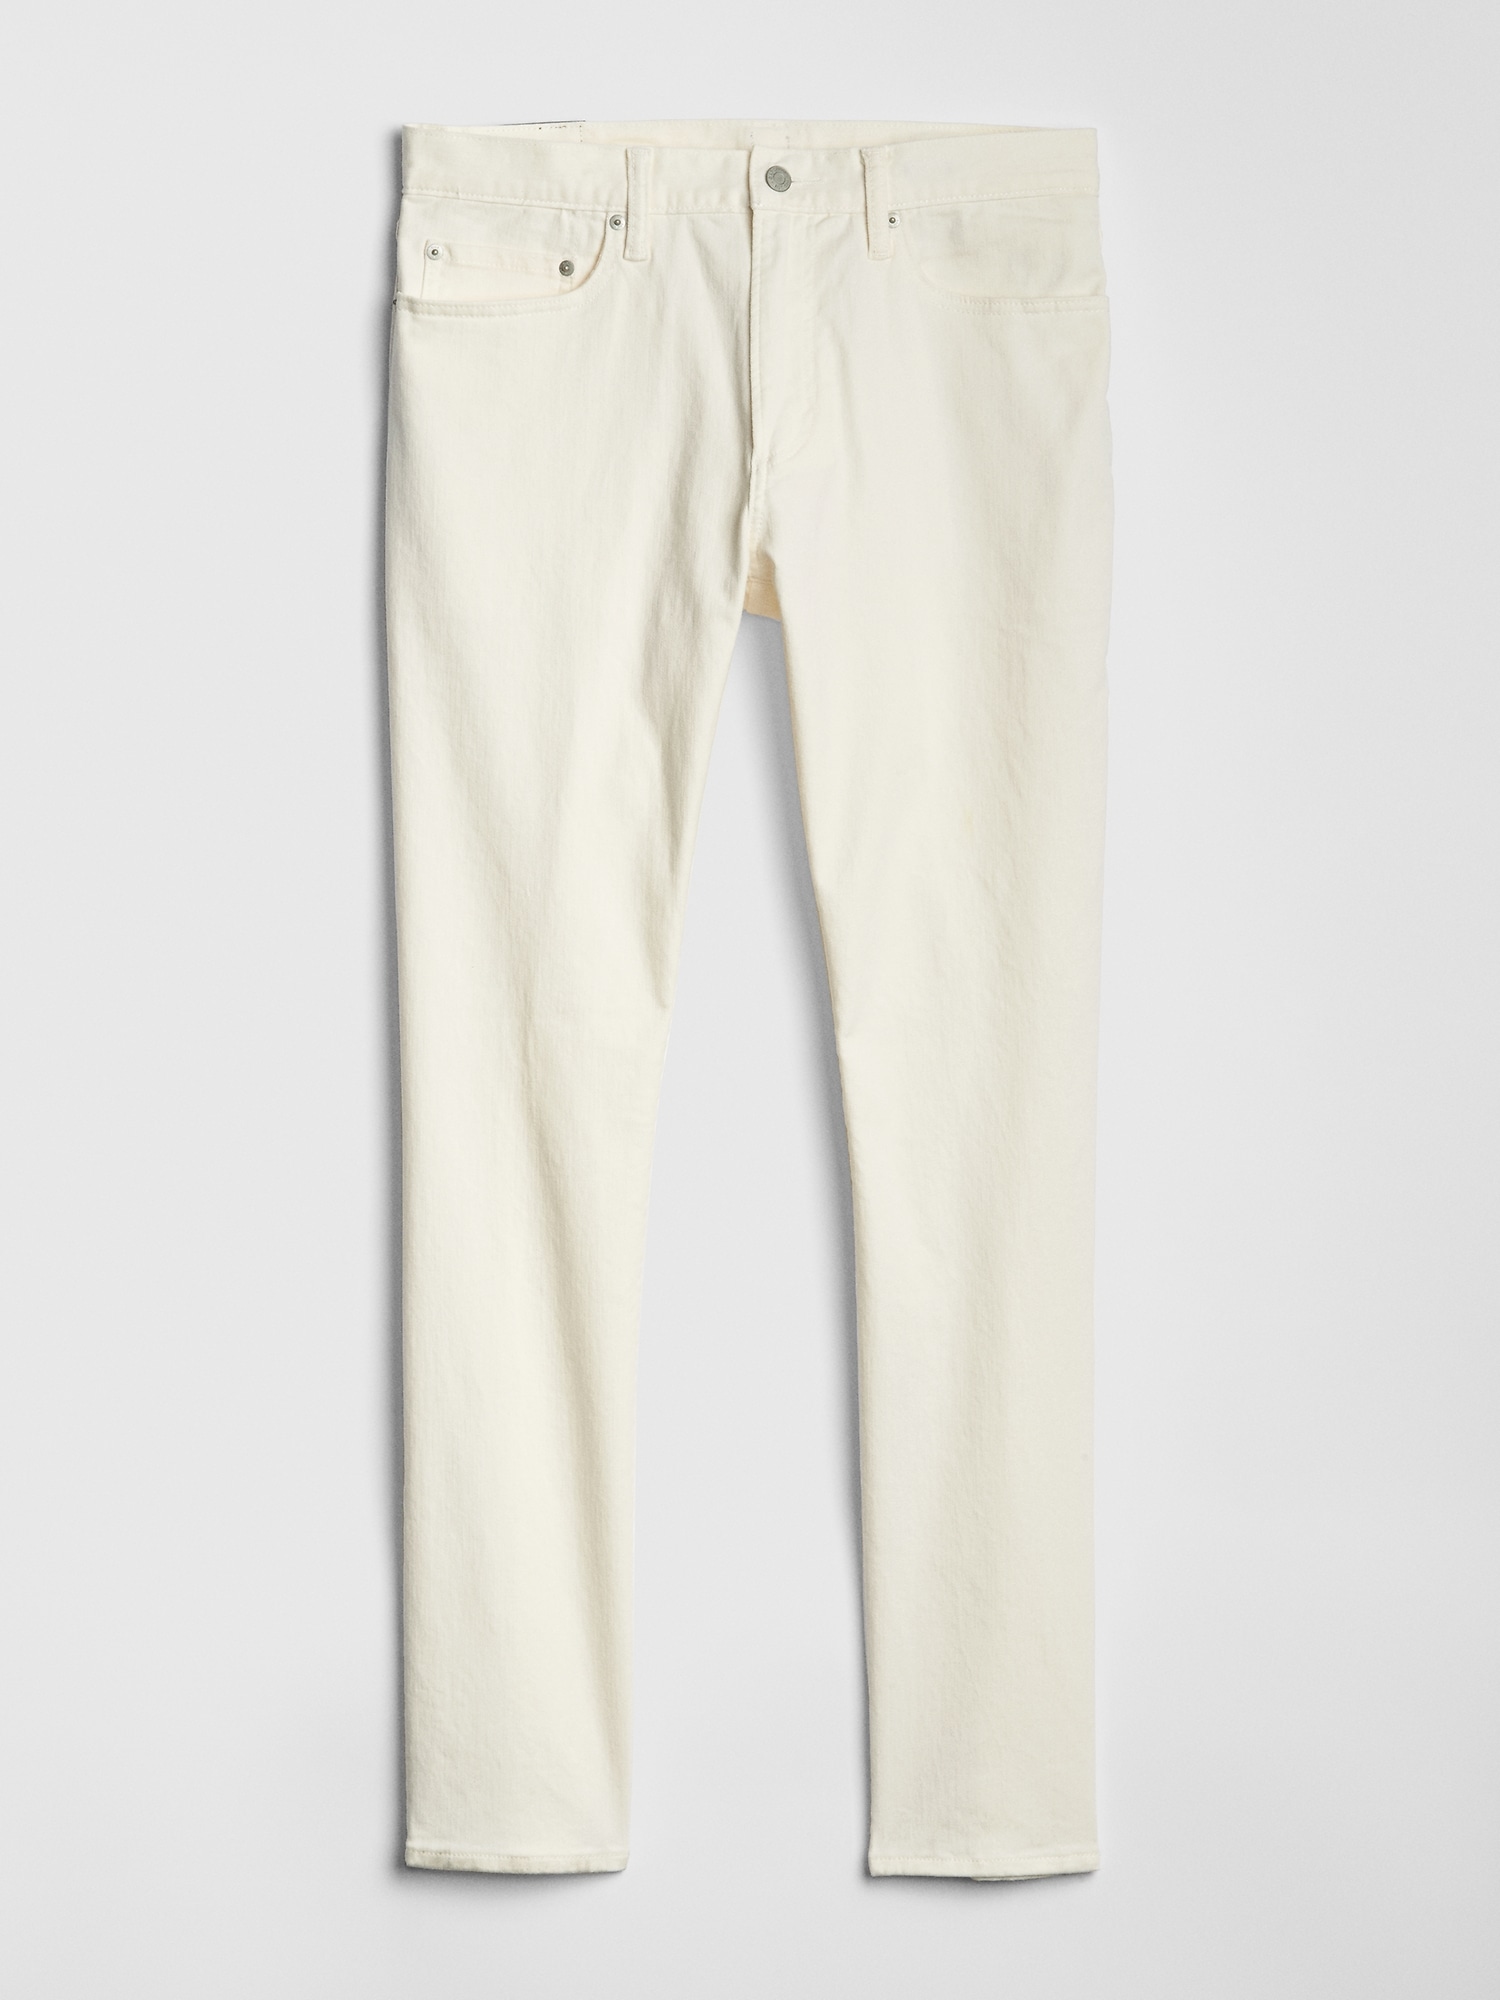 Slim Jeans with GapFlex | Gap